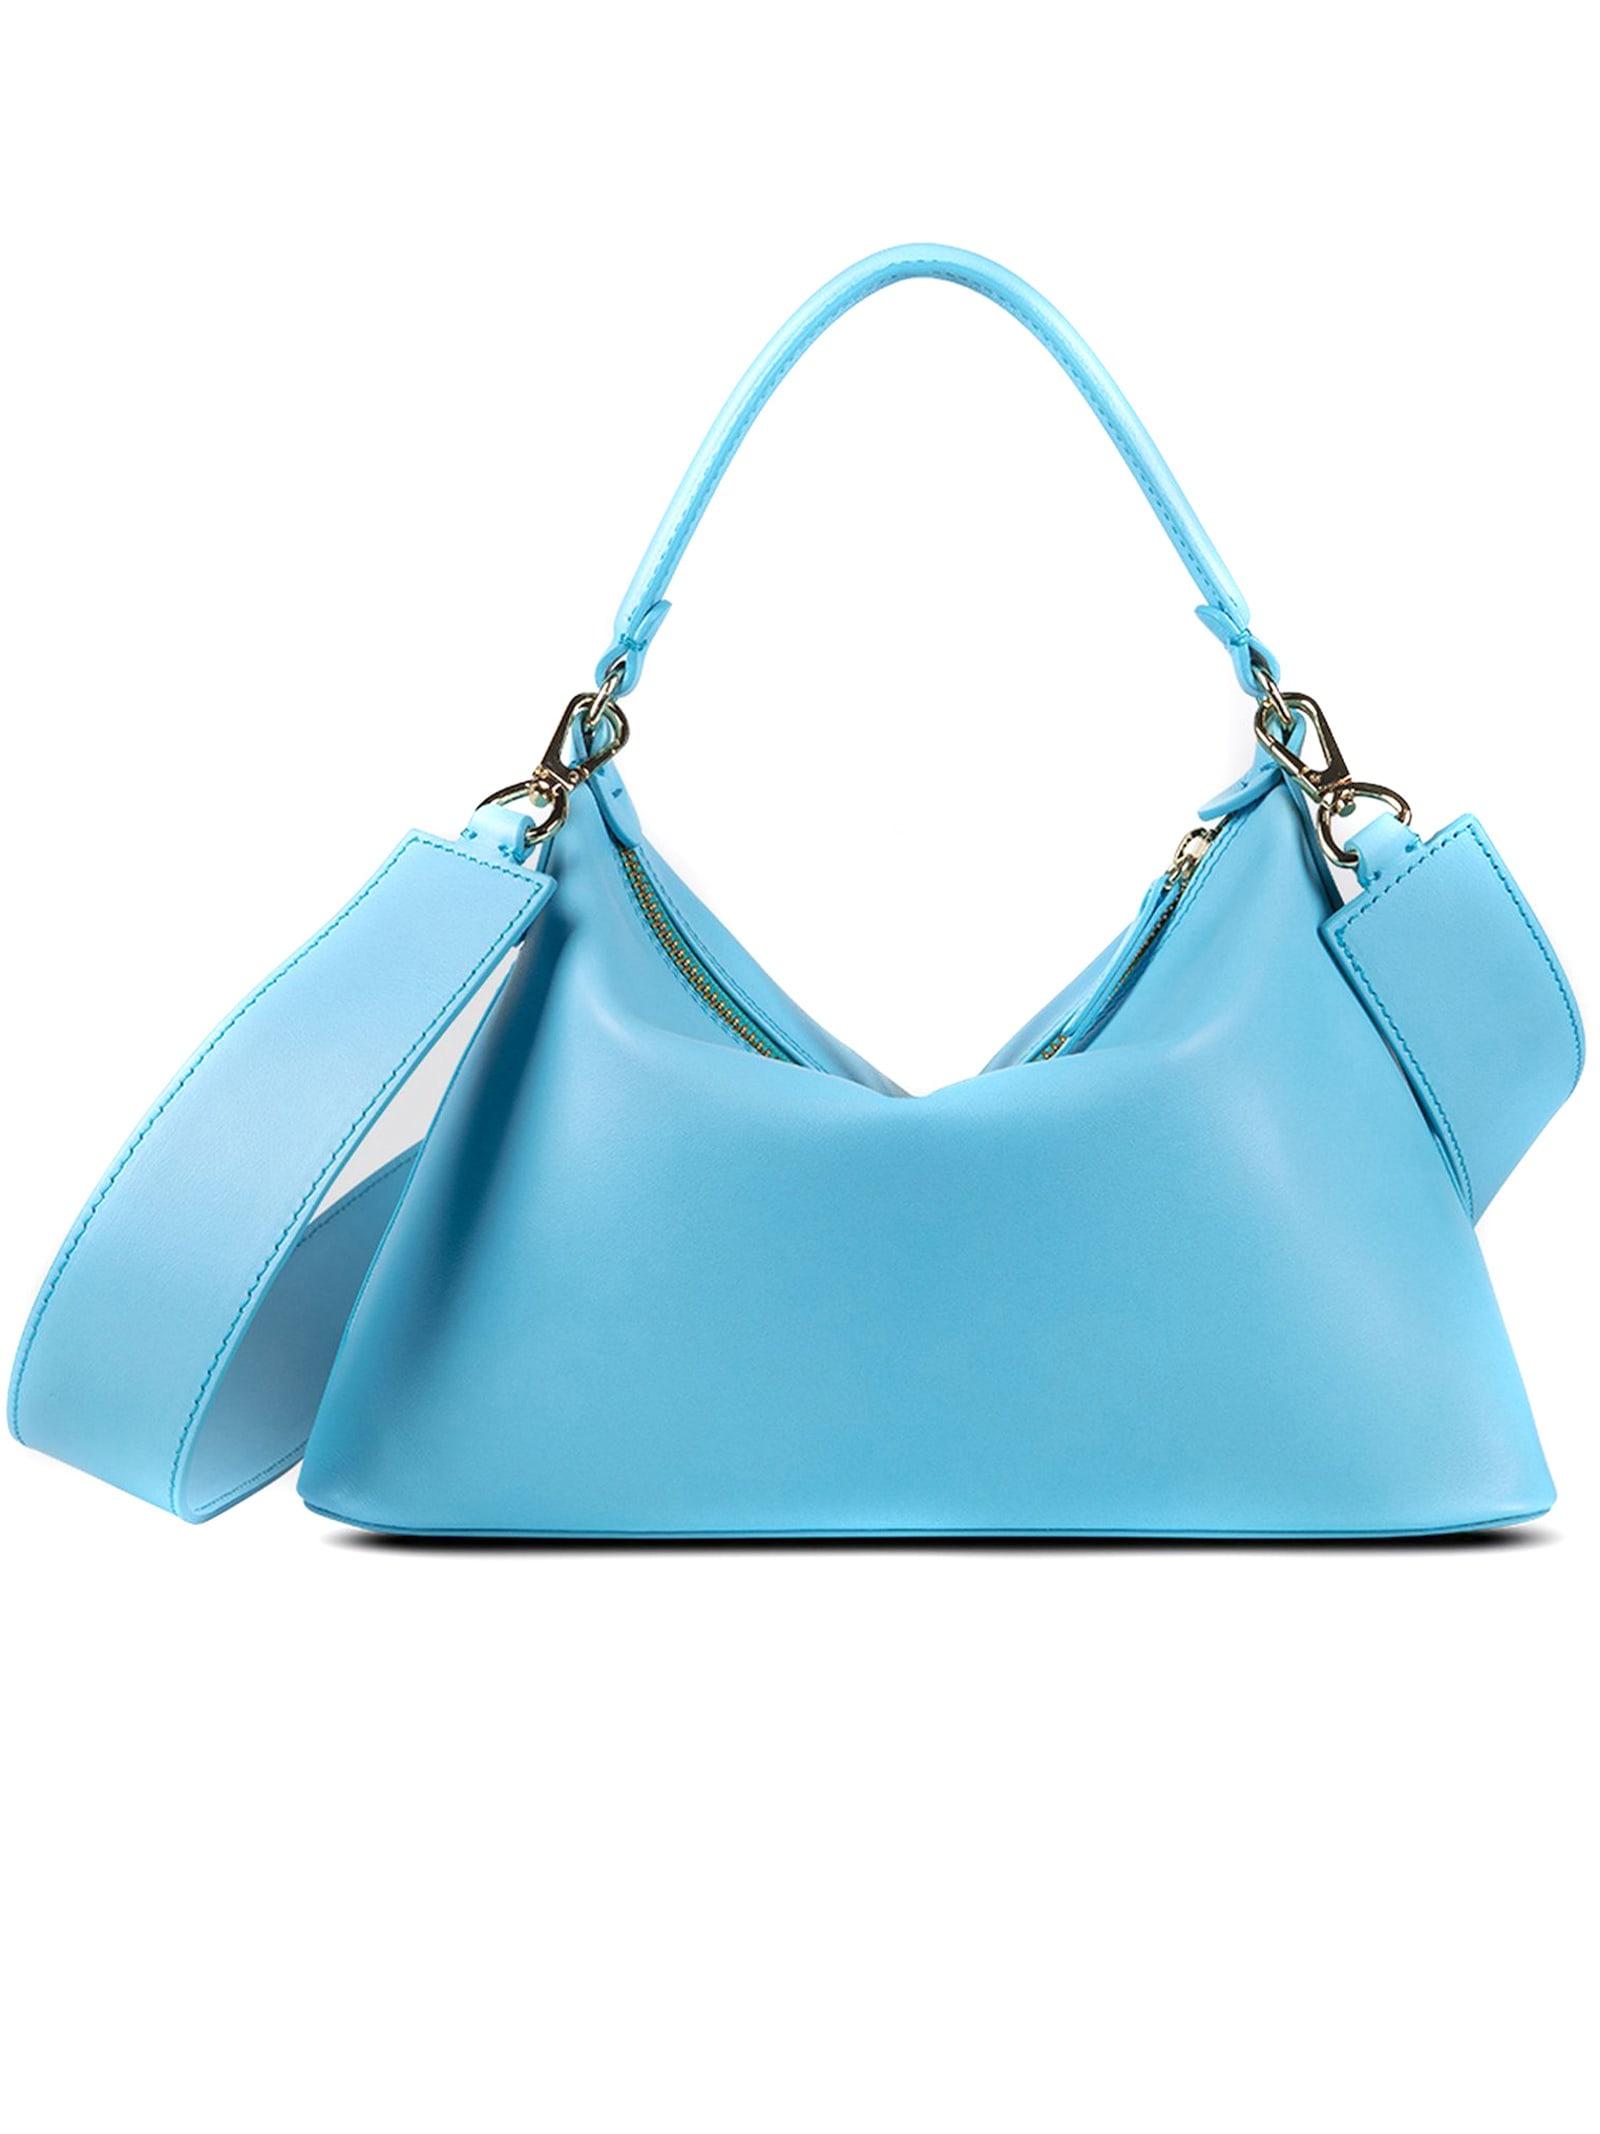 Liu Jo Leather Light Blue Small Hobo Bag | Lyst